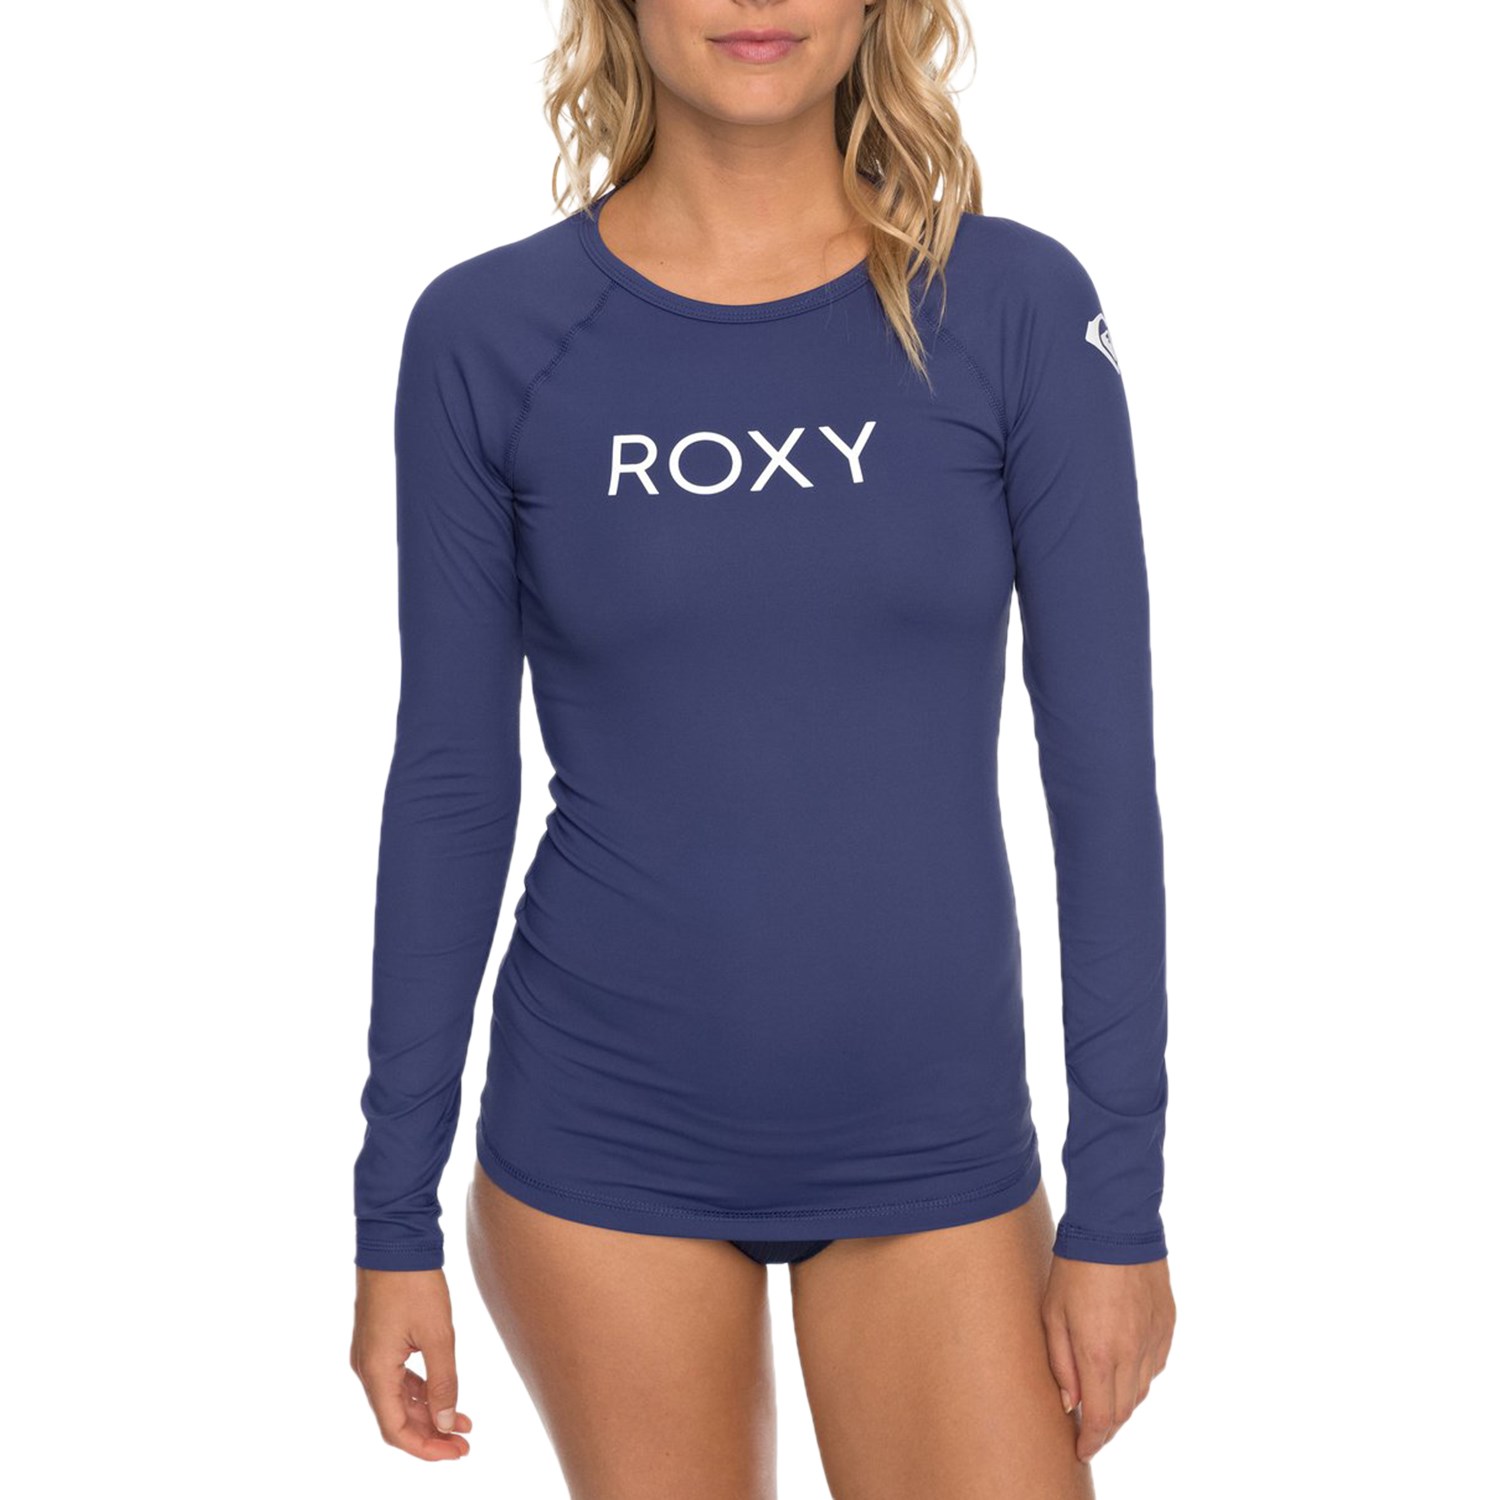 Roxy Womens Surf Long Sleeve Rashguard